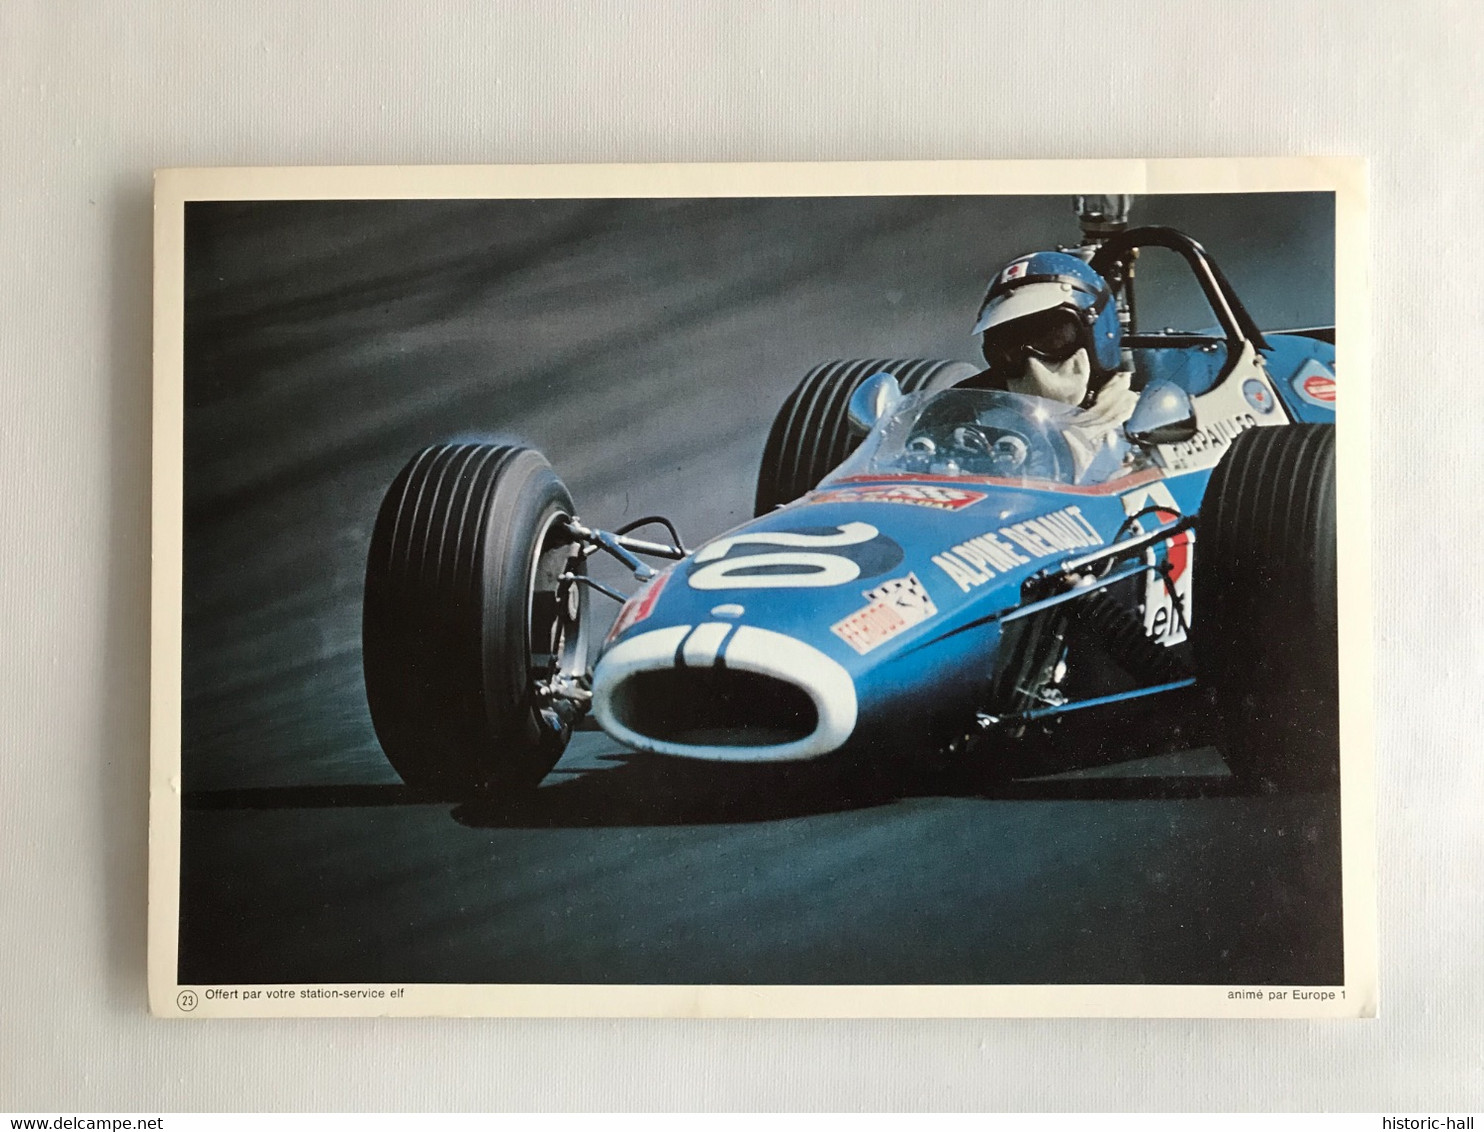 Carte Photo N°23 - ALPINE RENAULT ELF Type Formule 3 - 1970 - Automobile - F1